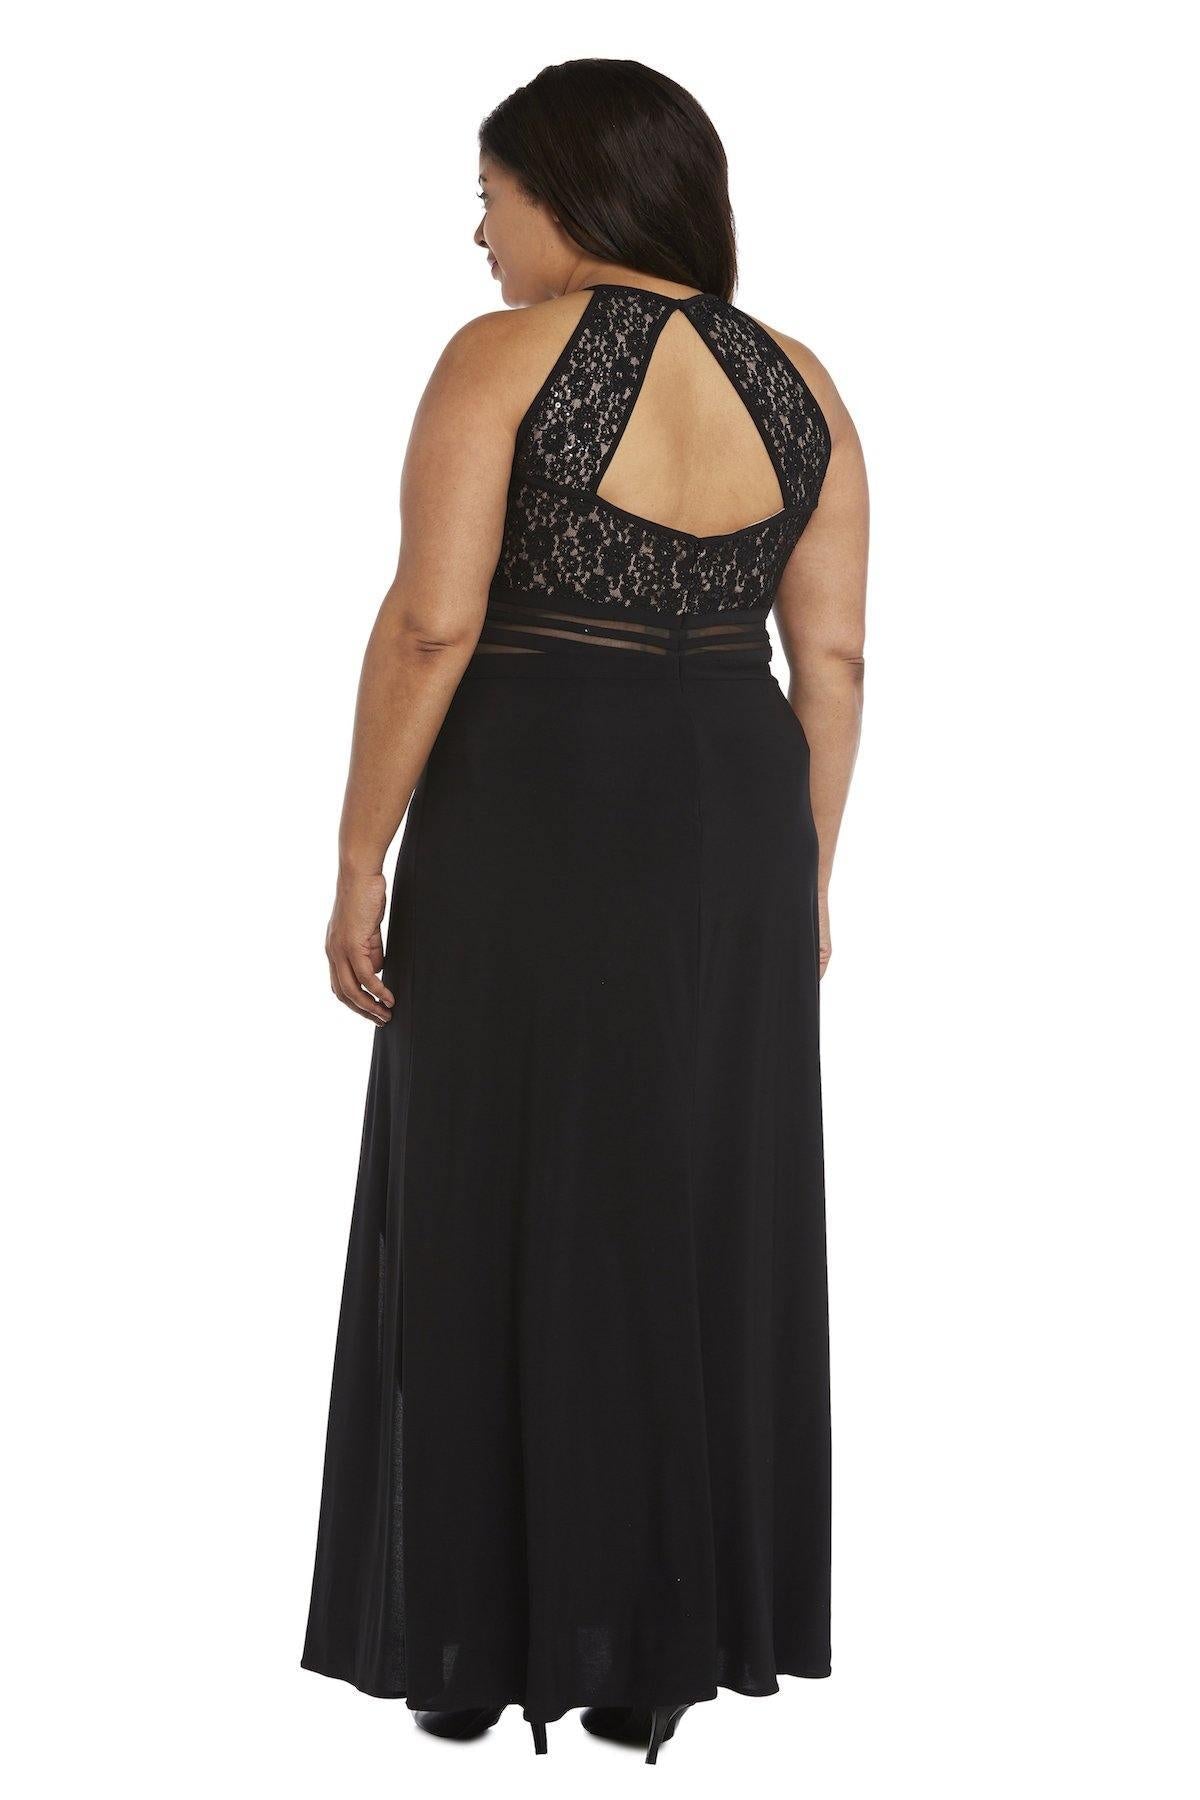 Black/Nude Morgan & Co 12524WM Long Plus Size Evening Dress Sale for ...